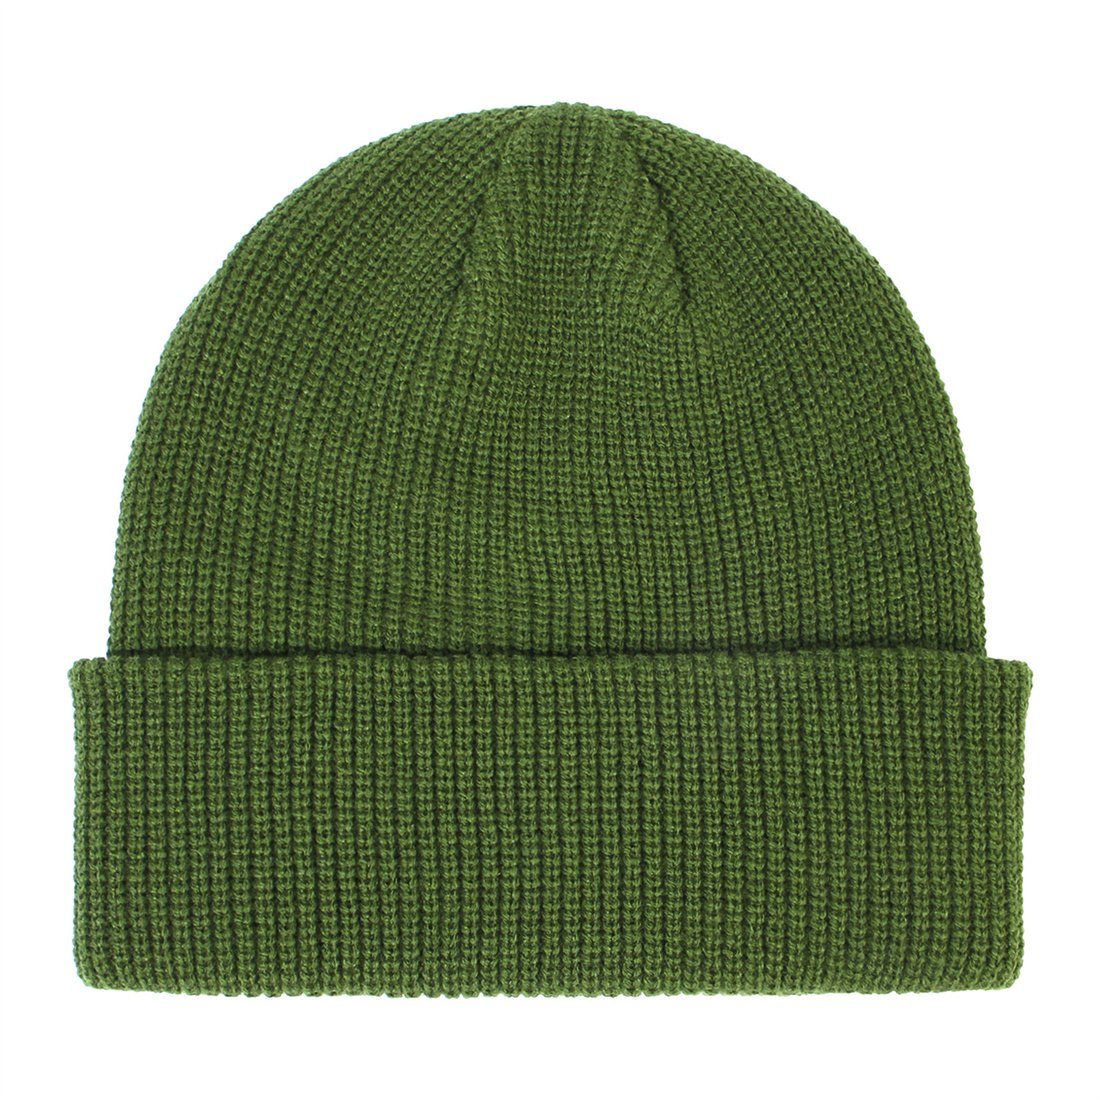 Wollmütze Strickmütze, einfarbig Strickmütze Mode warme DÖRÖY warme Winter Unisex grün